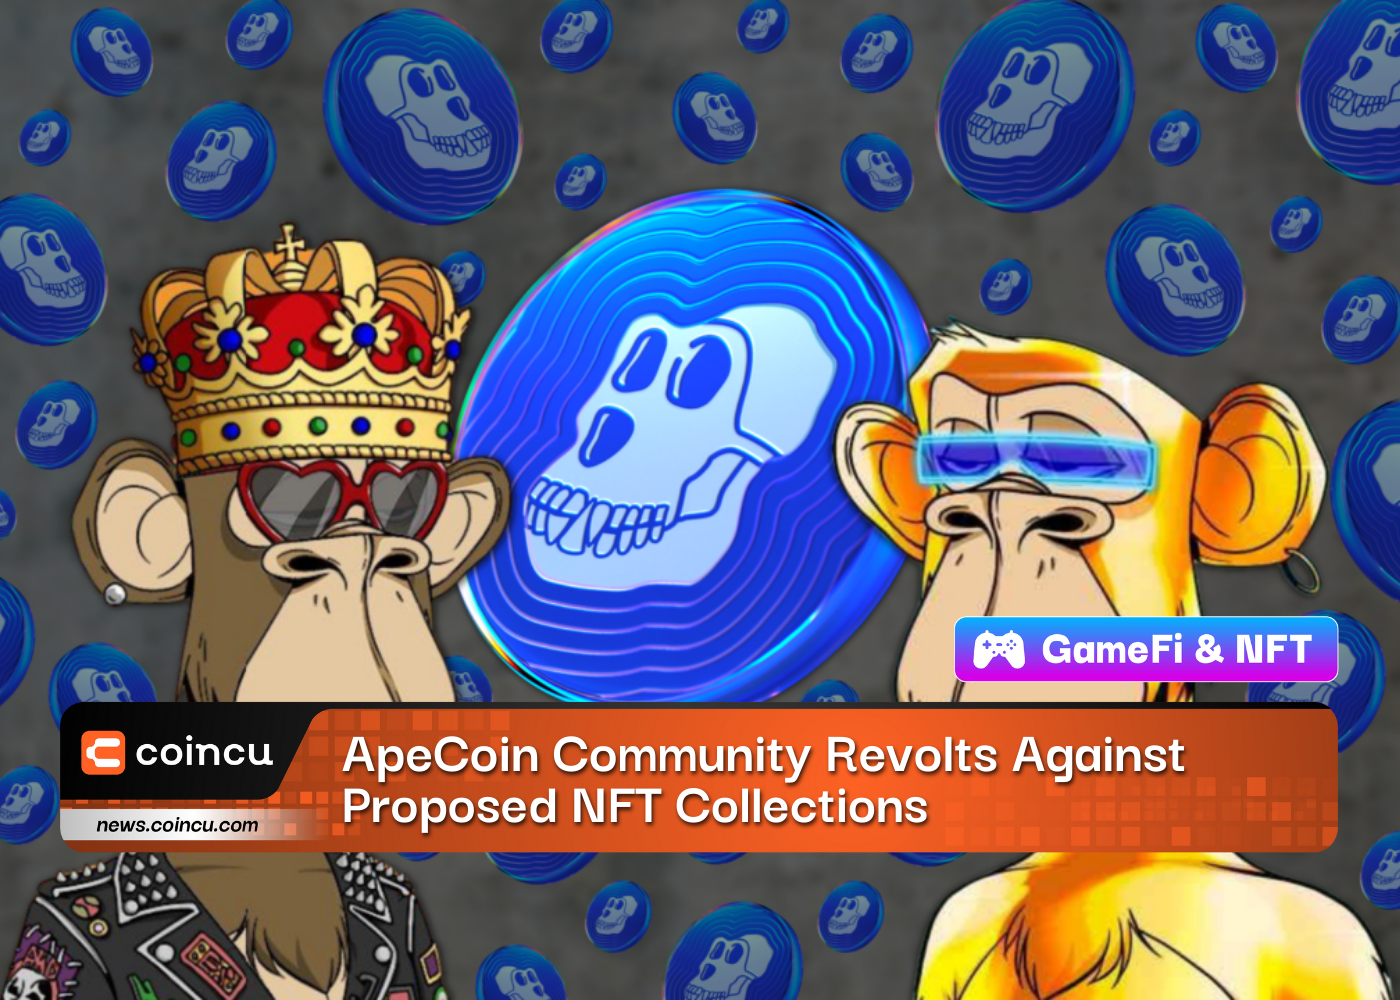 ApeCoin Community Revolts Against